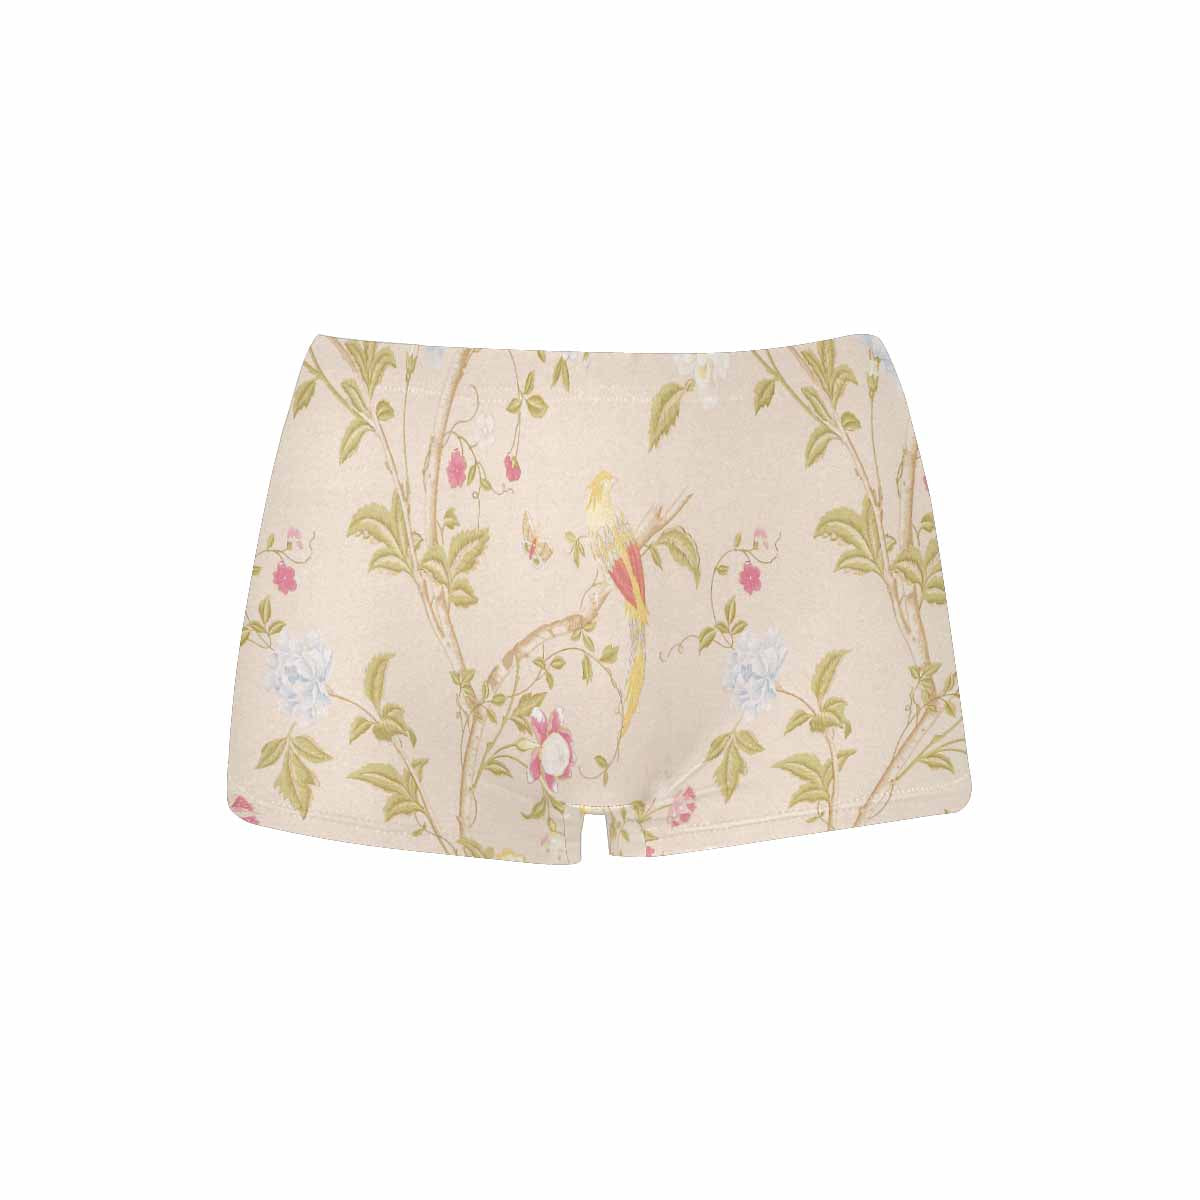 Floral 2, boyshorts, daisy dukes, pum pum shorts, panties, design 07